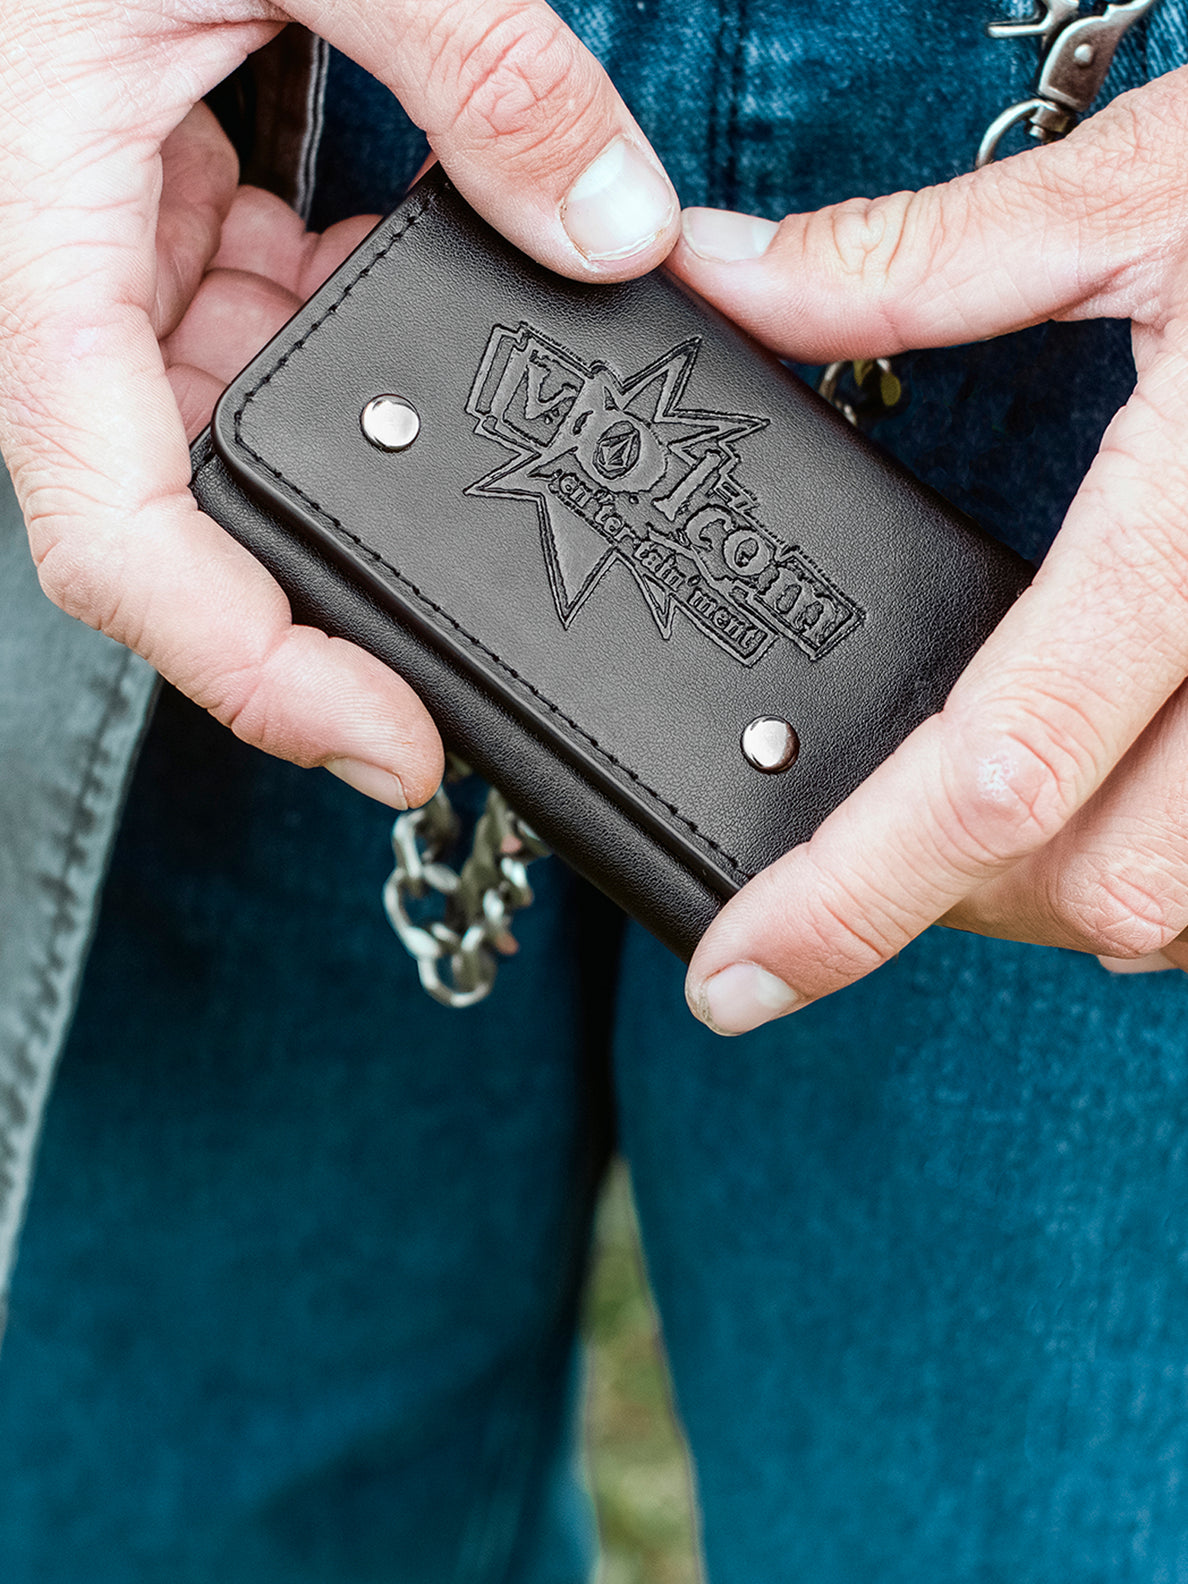 Volcom Entertainment Leather Wallet - Black